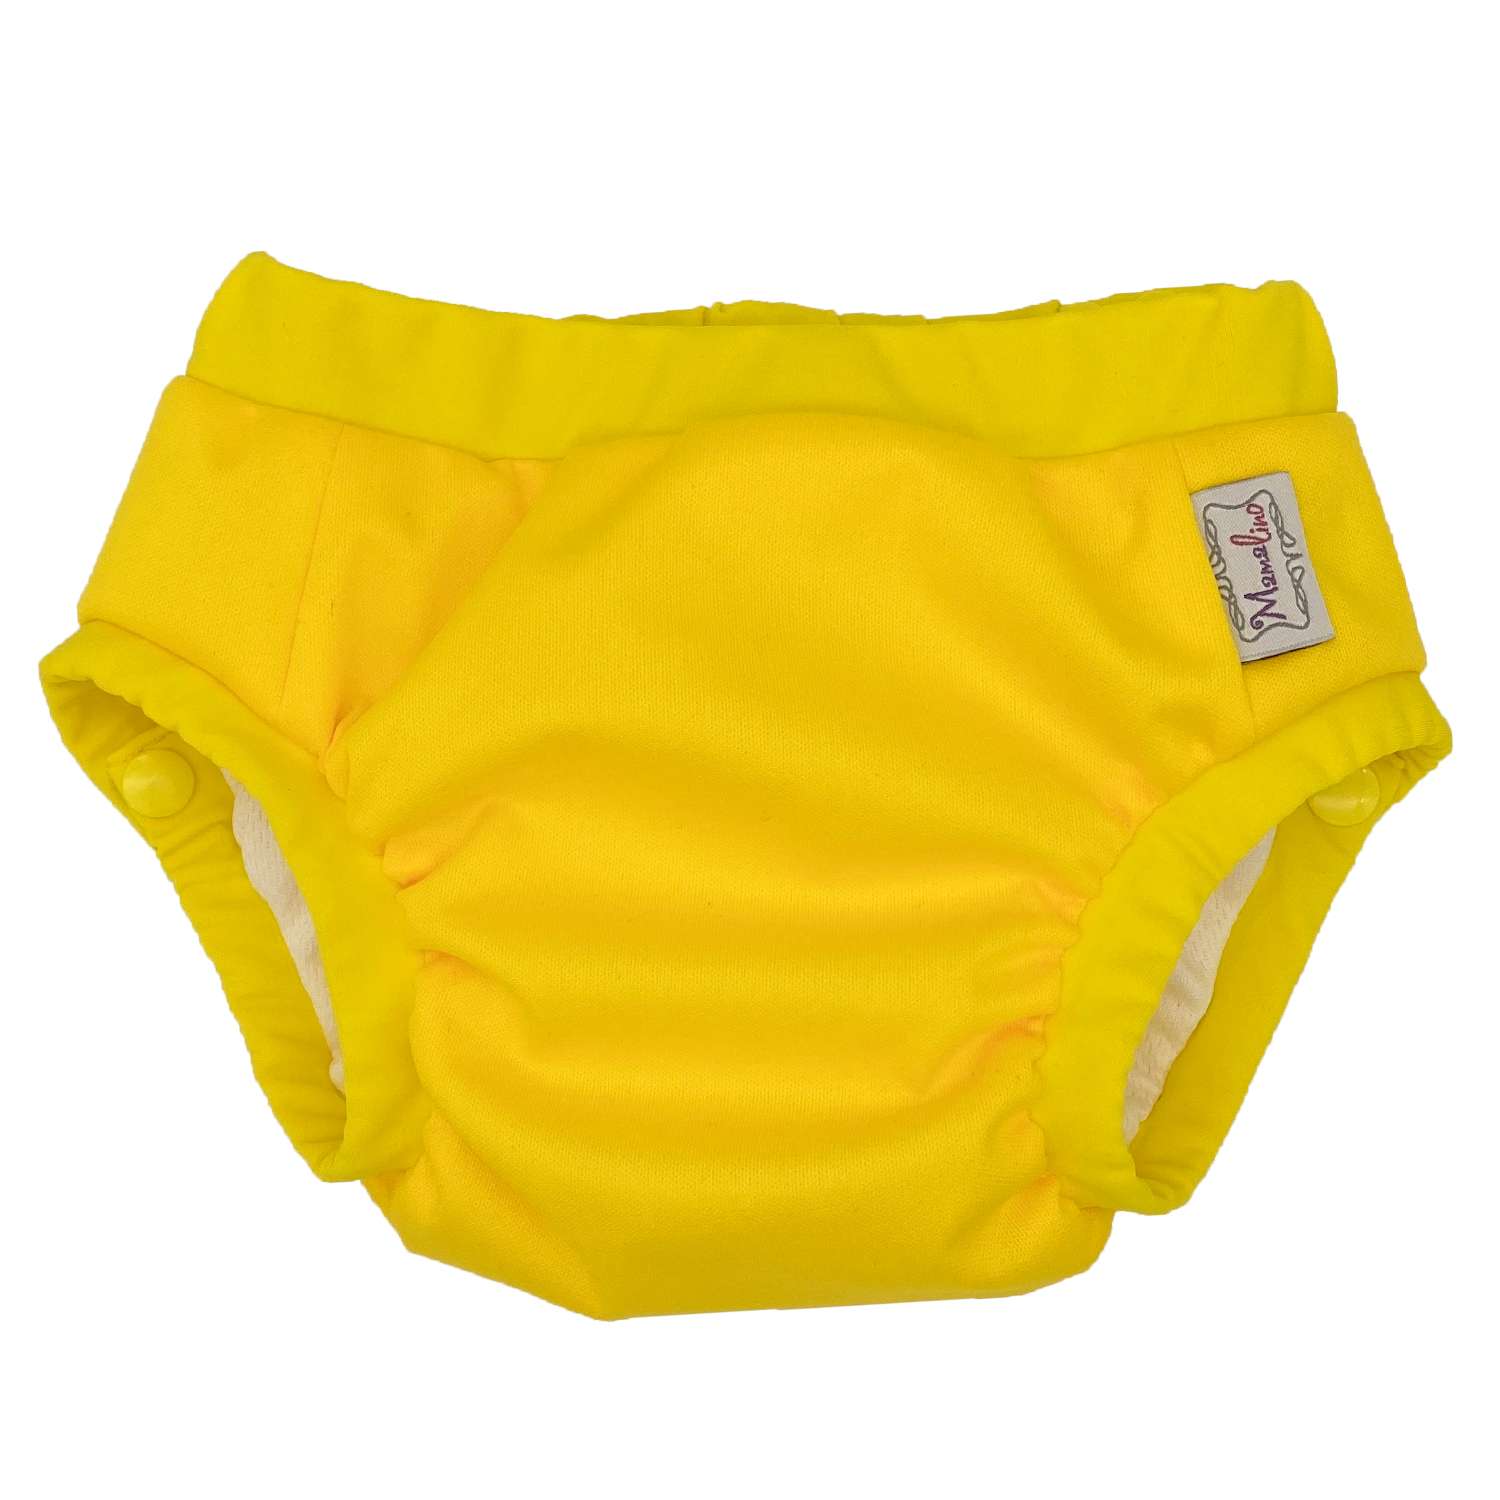 Трусики для плавания Mamalino многоразовые желтые размер М 5-10 кг - фото 1